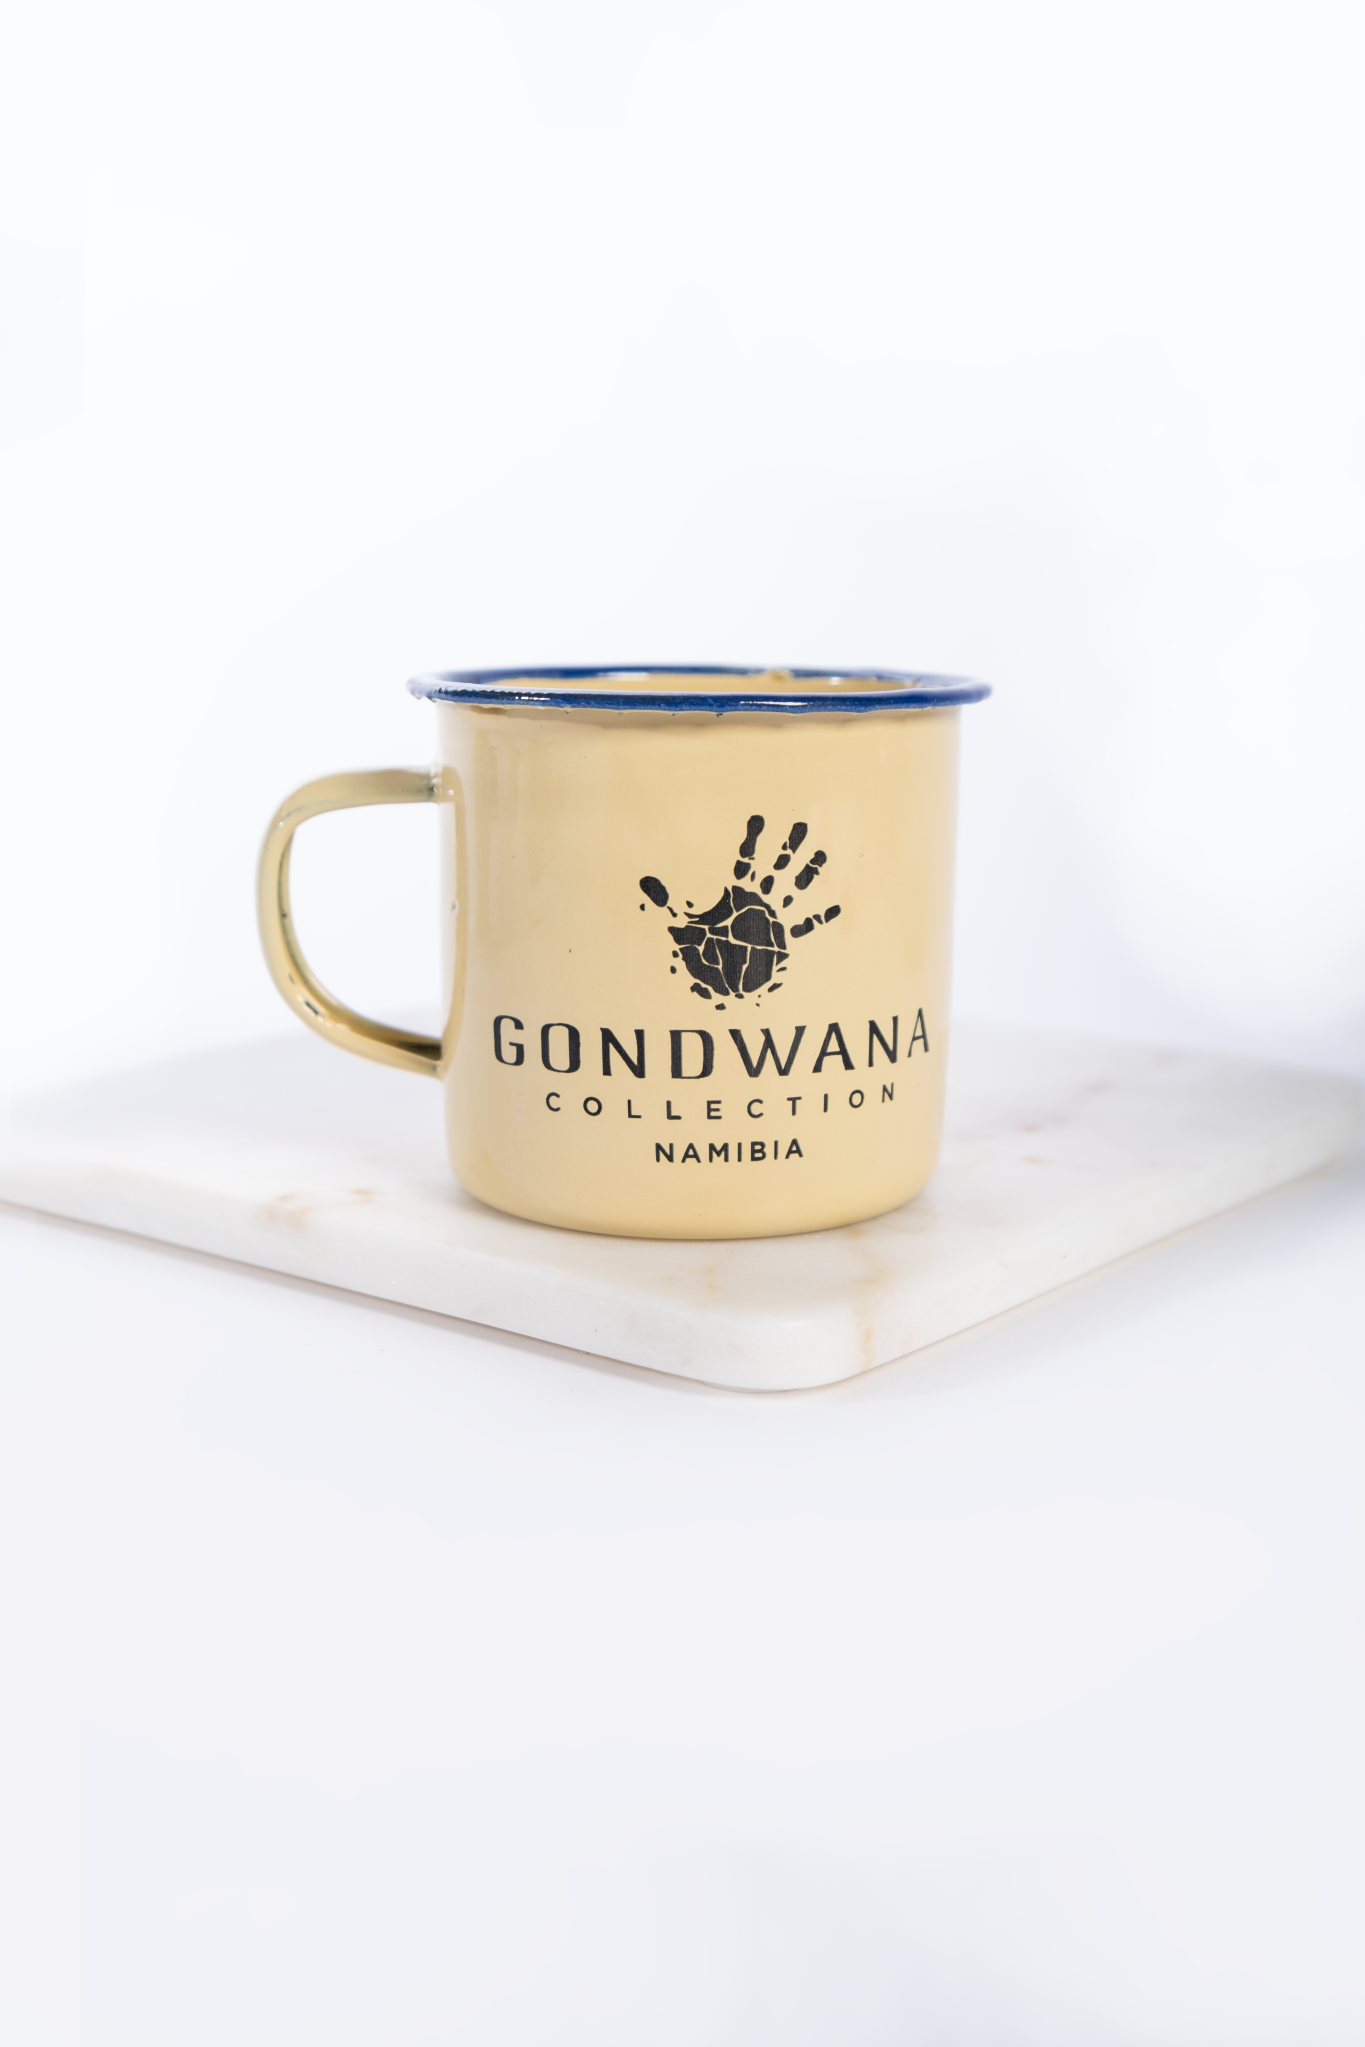 Gondwana Logo Enamel Mug 250ml